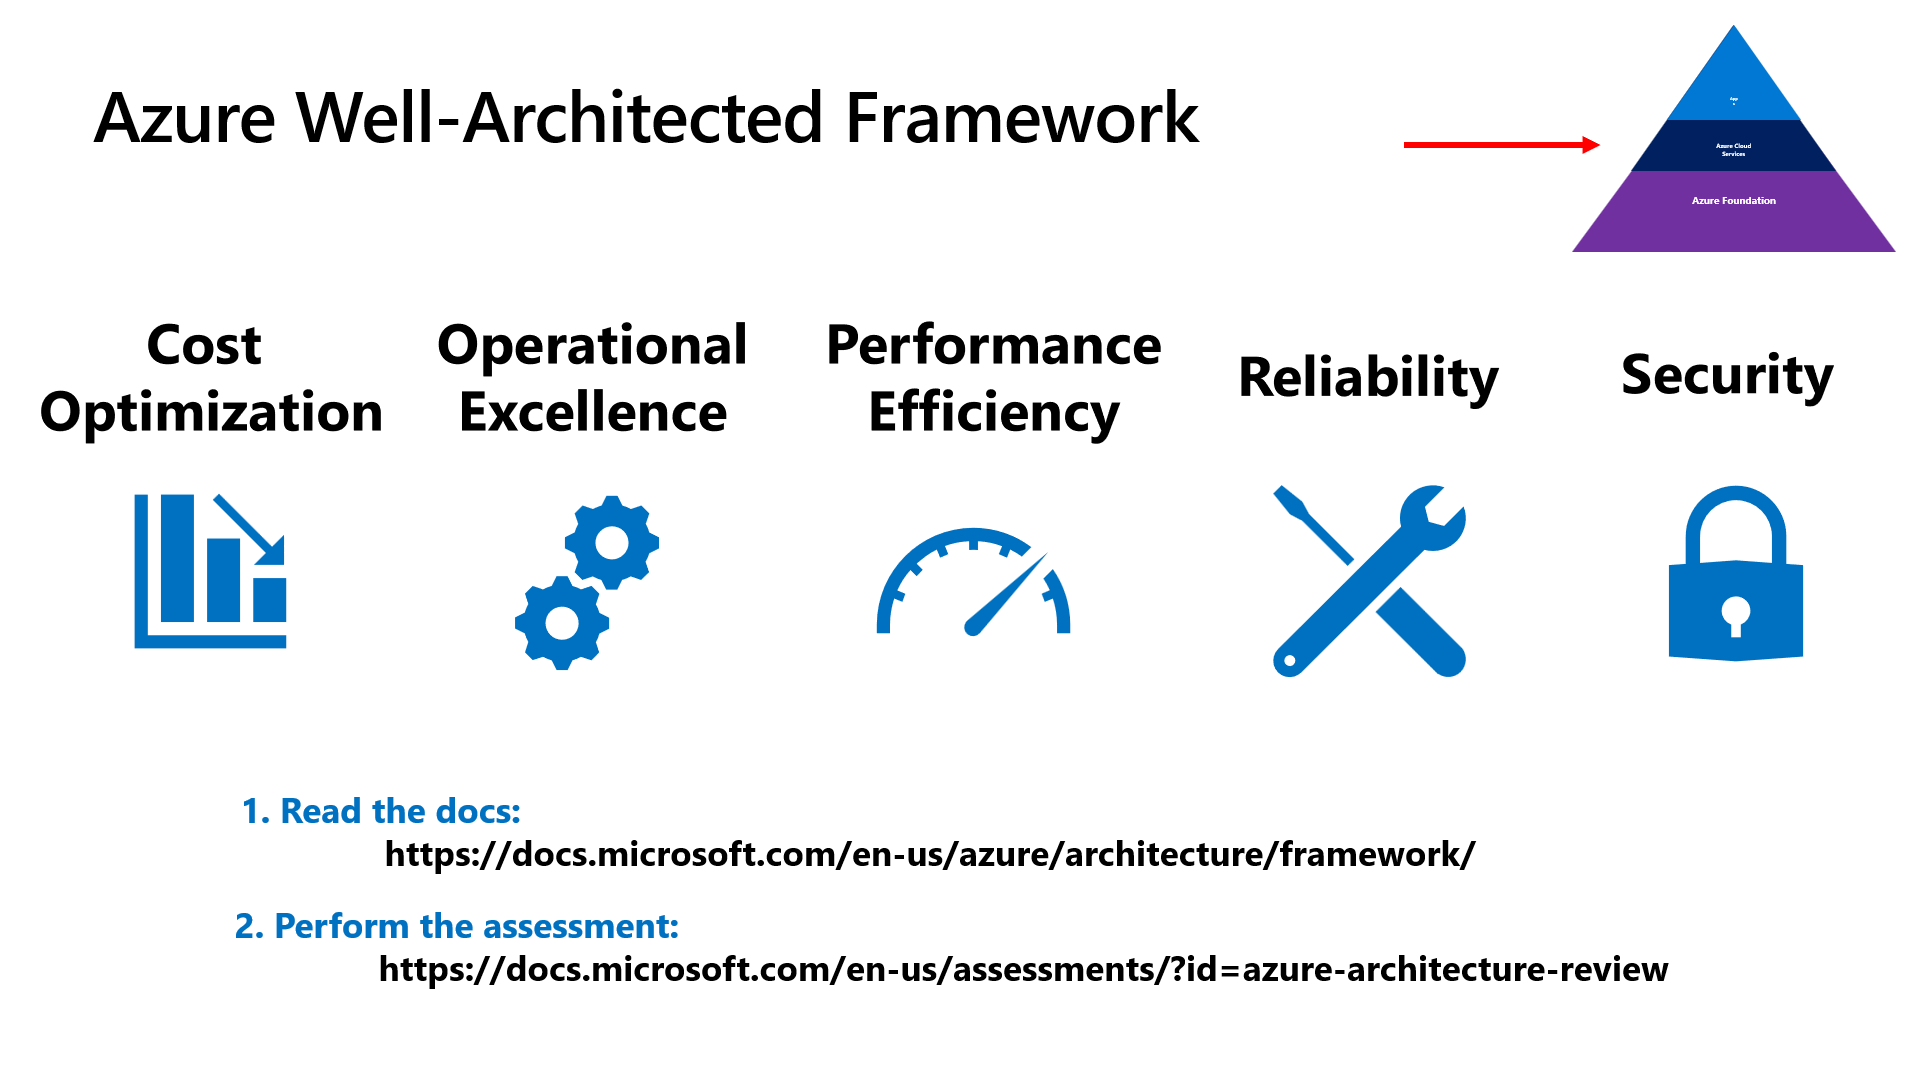 Azure Well-Architected Framework Overview